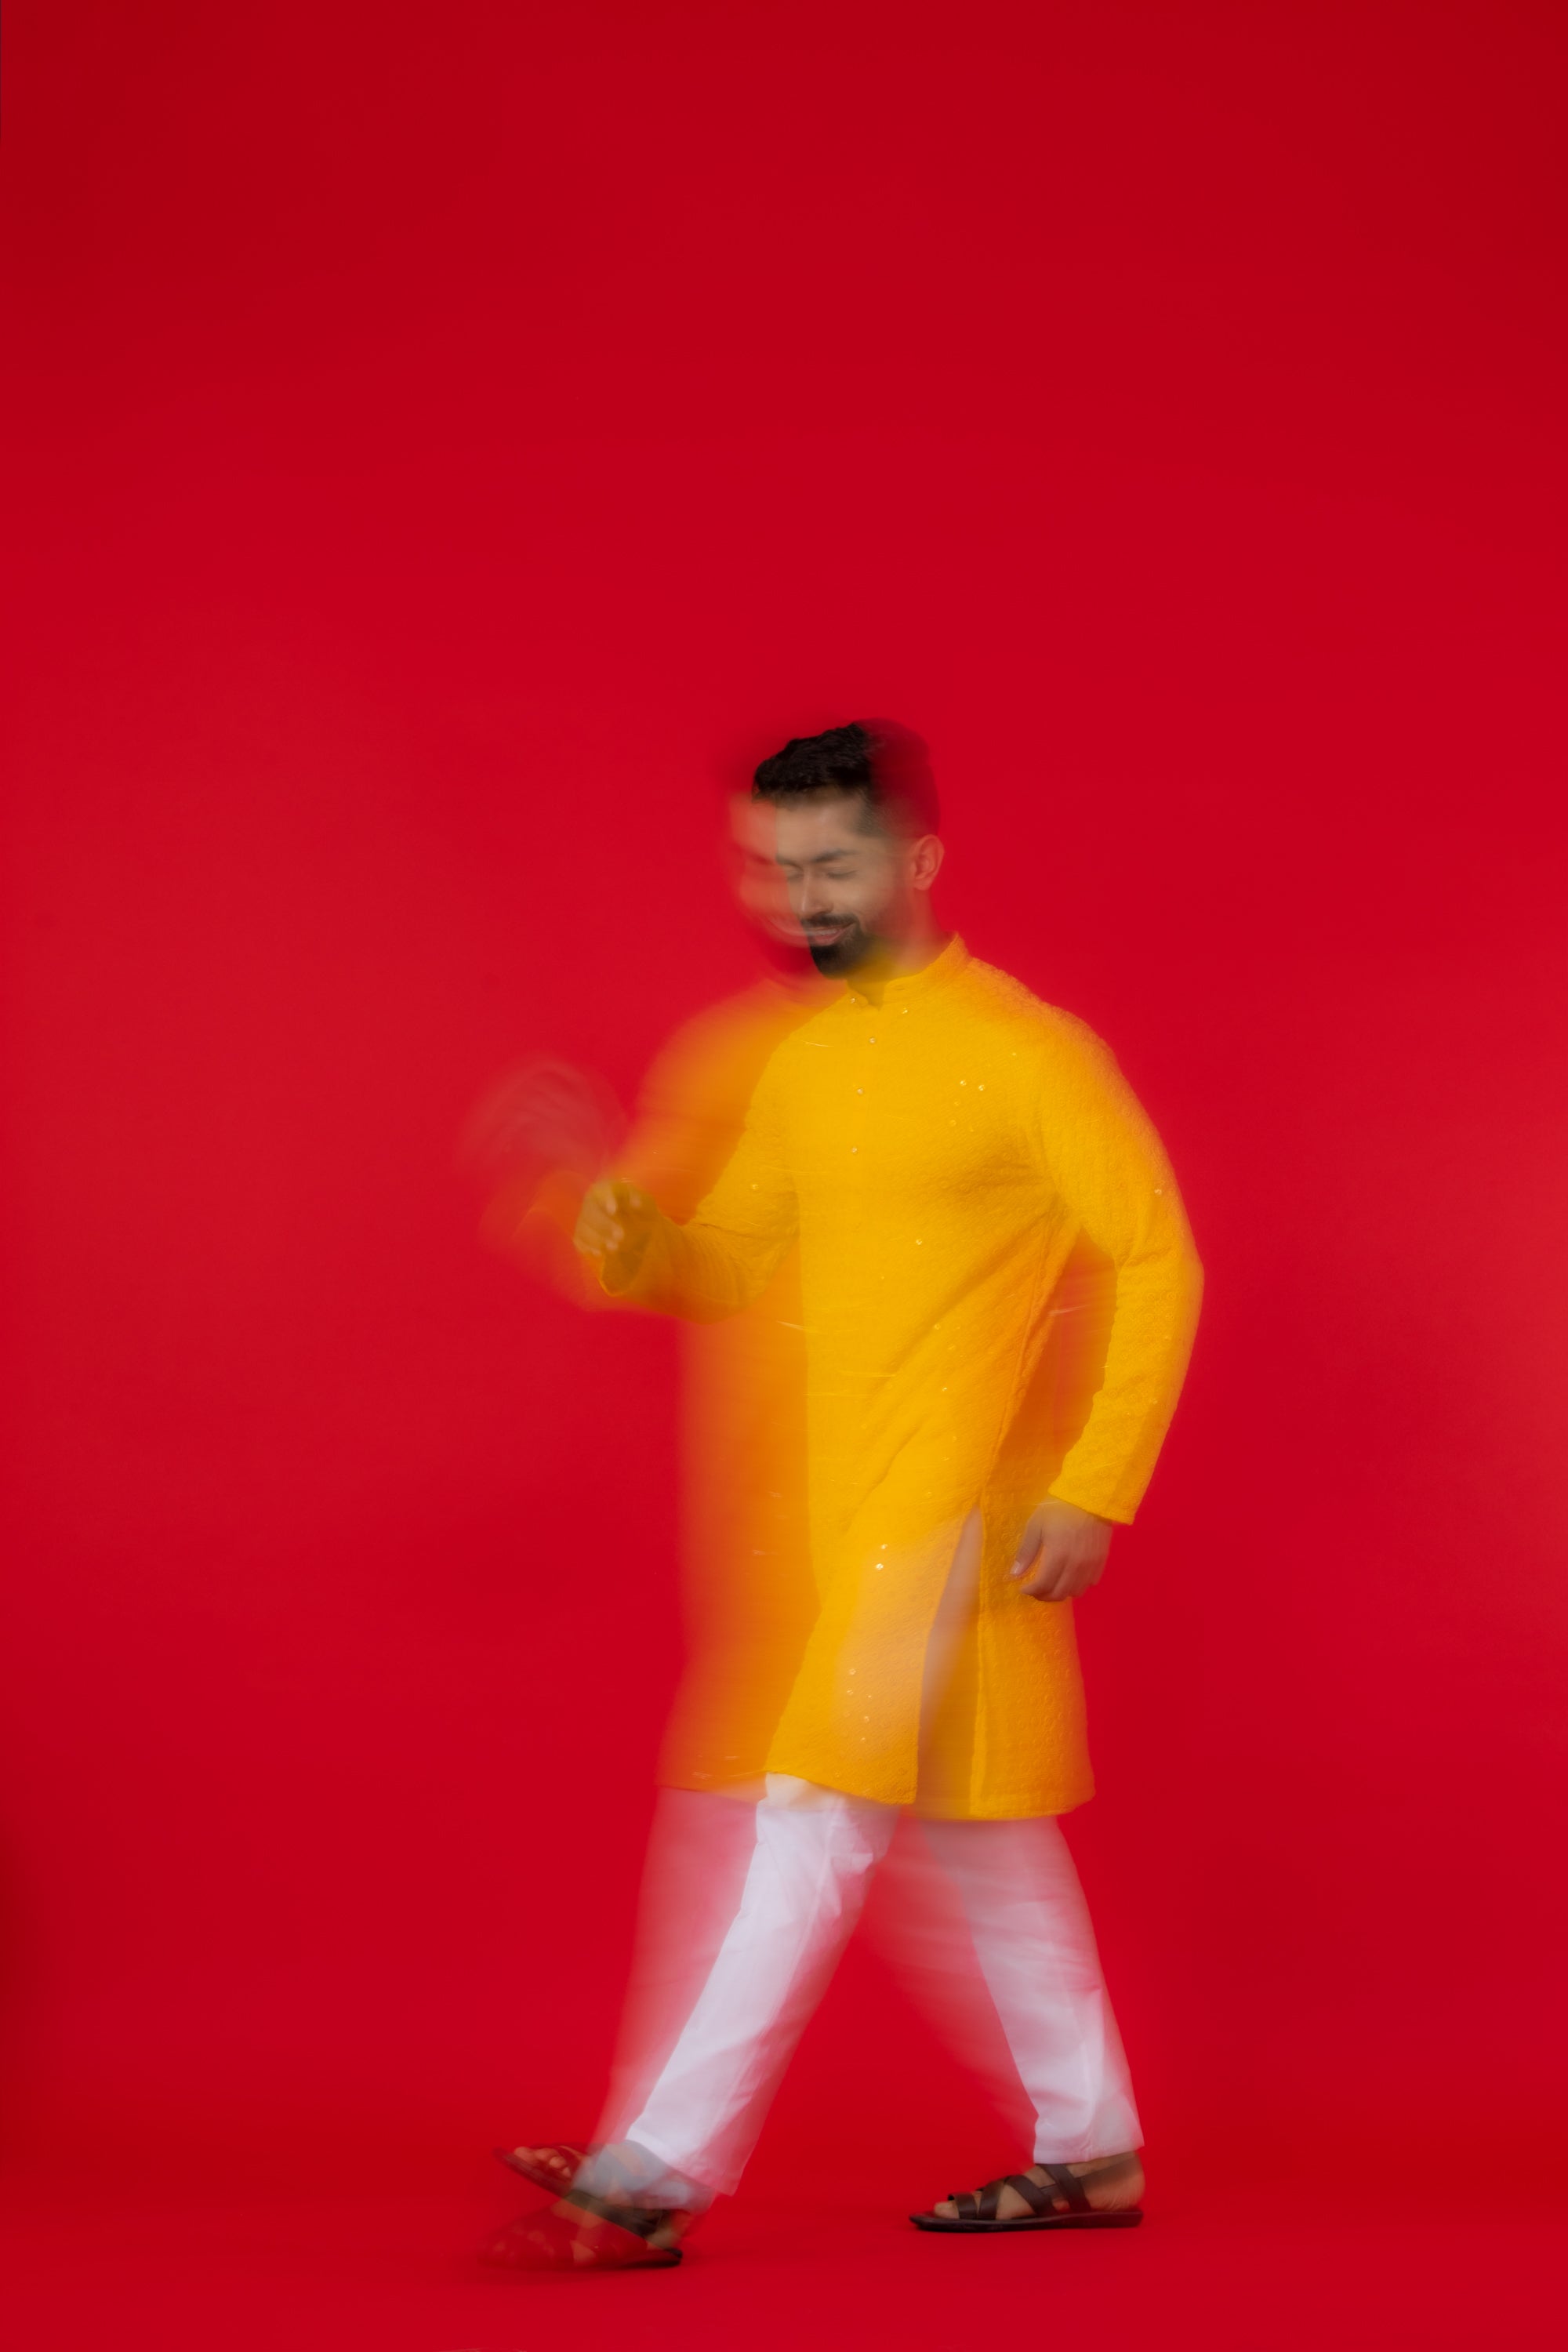 Firangi Yarn Lucknowi Lakhnavi Chikankari Sequin Work Cotton Kurta For Men Yellow